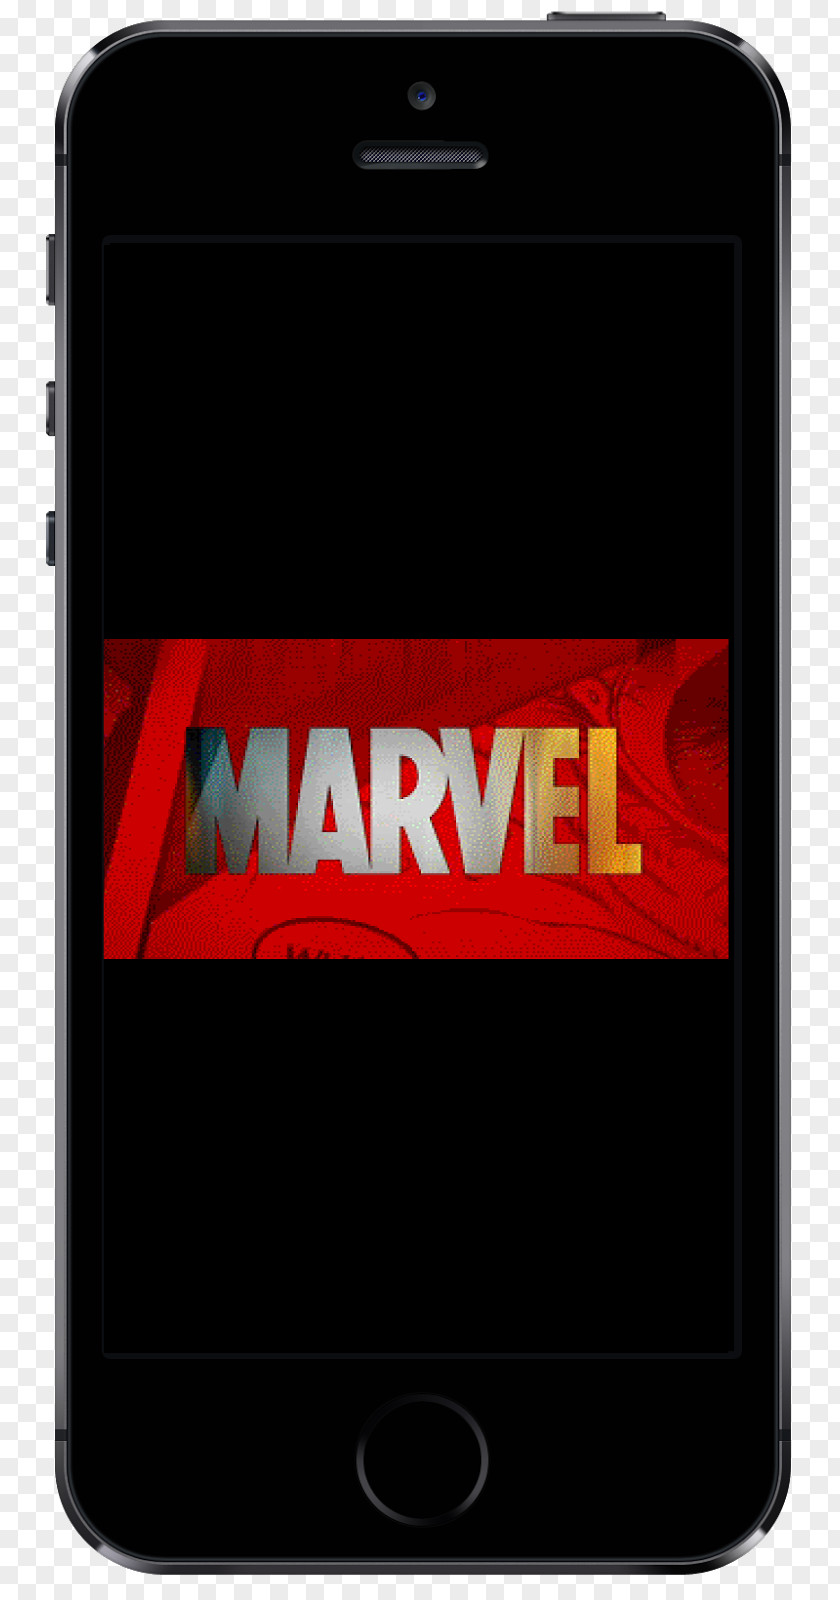 Marvel Studios Logo Feature Phone Mobile Accessories Font PNG